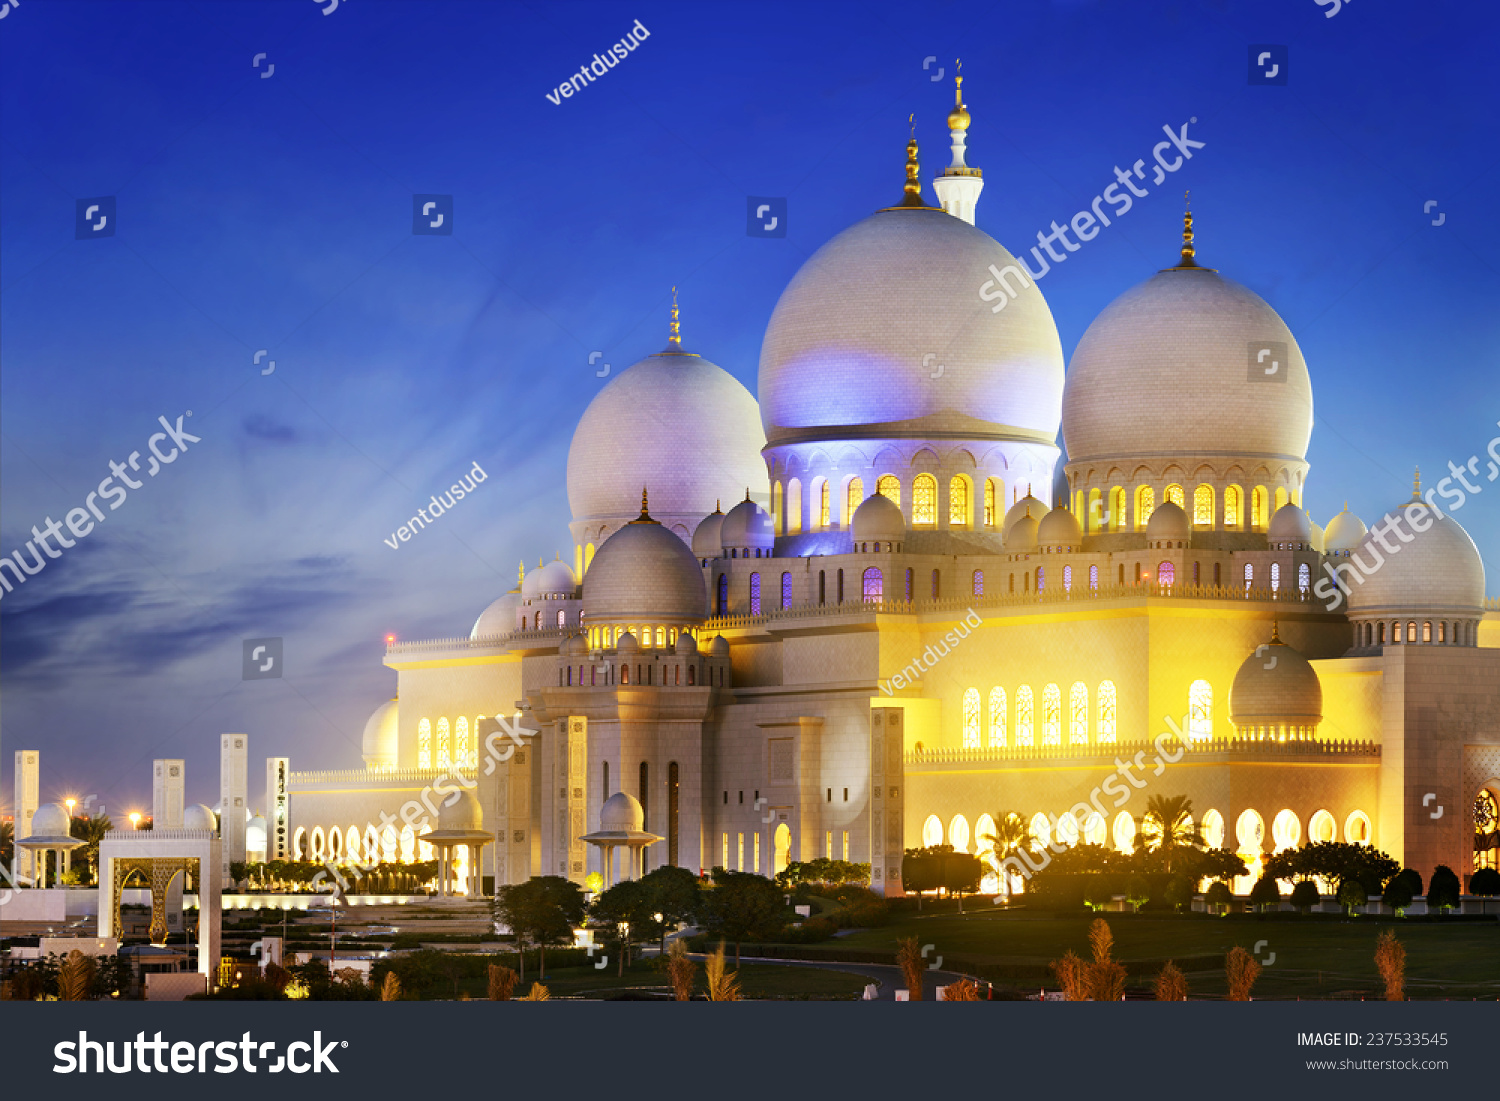 Sheikh Zayed Grand Mosque at dusk (Abu-Dhabi, UAE)  #237533545